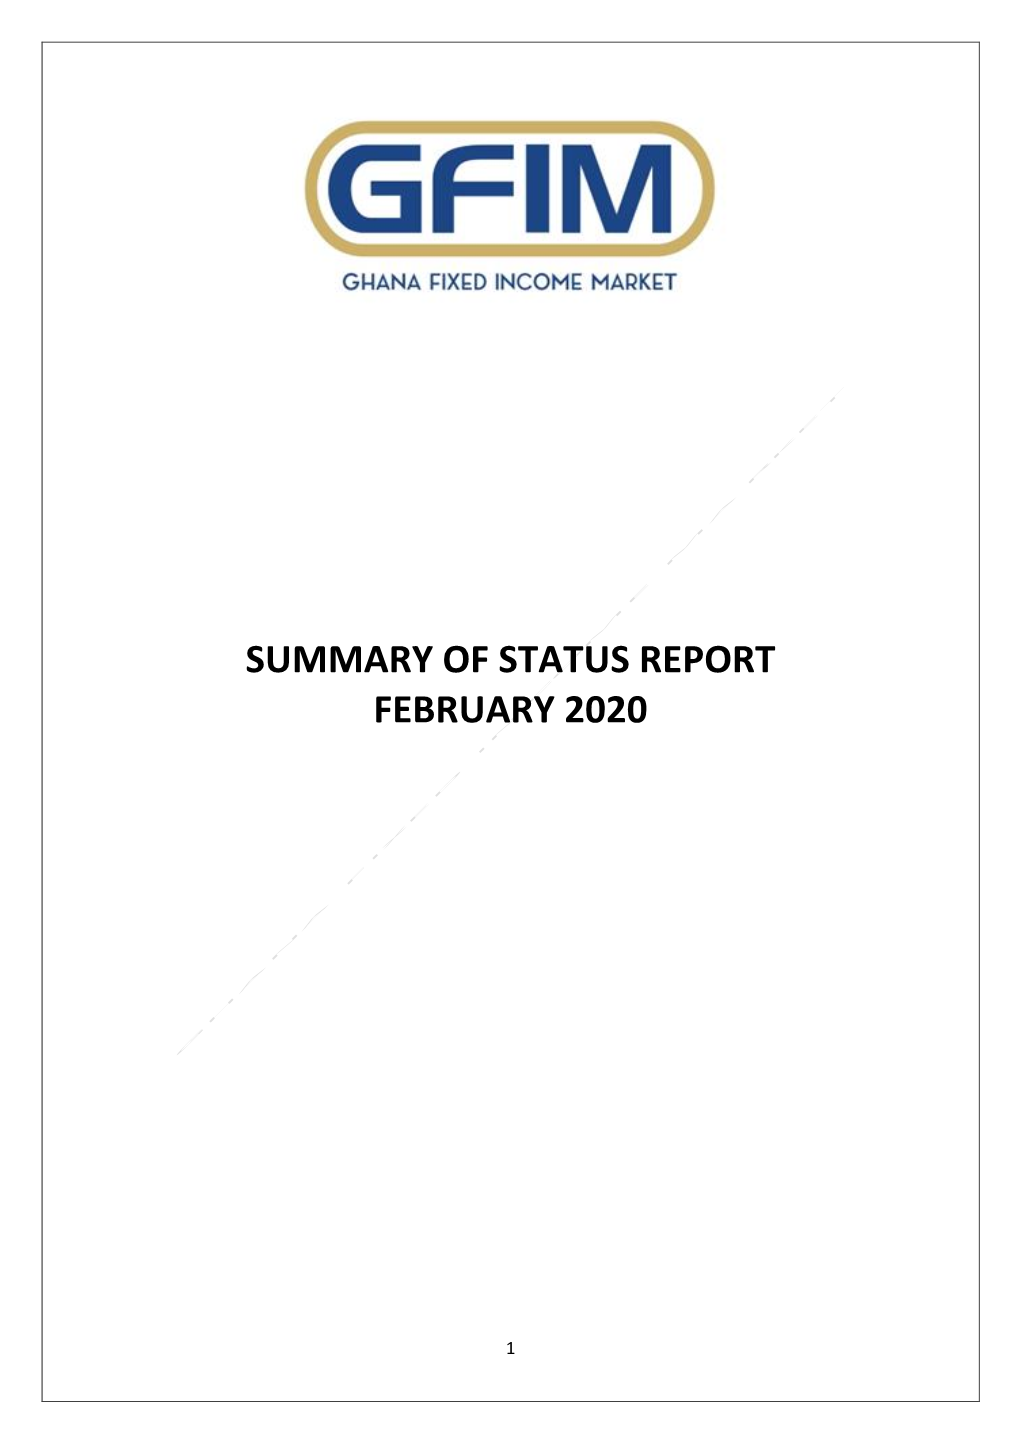 Summary of Status Report February 2020